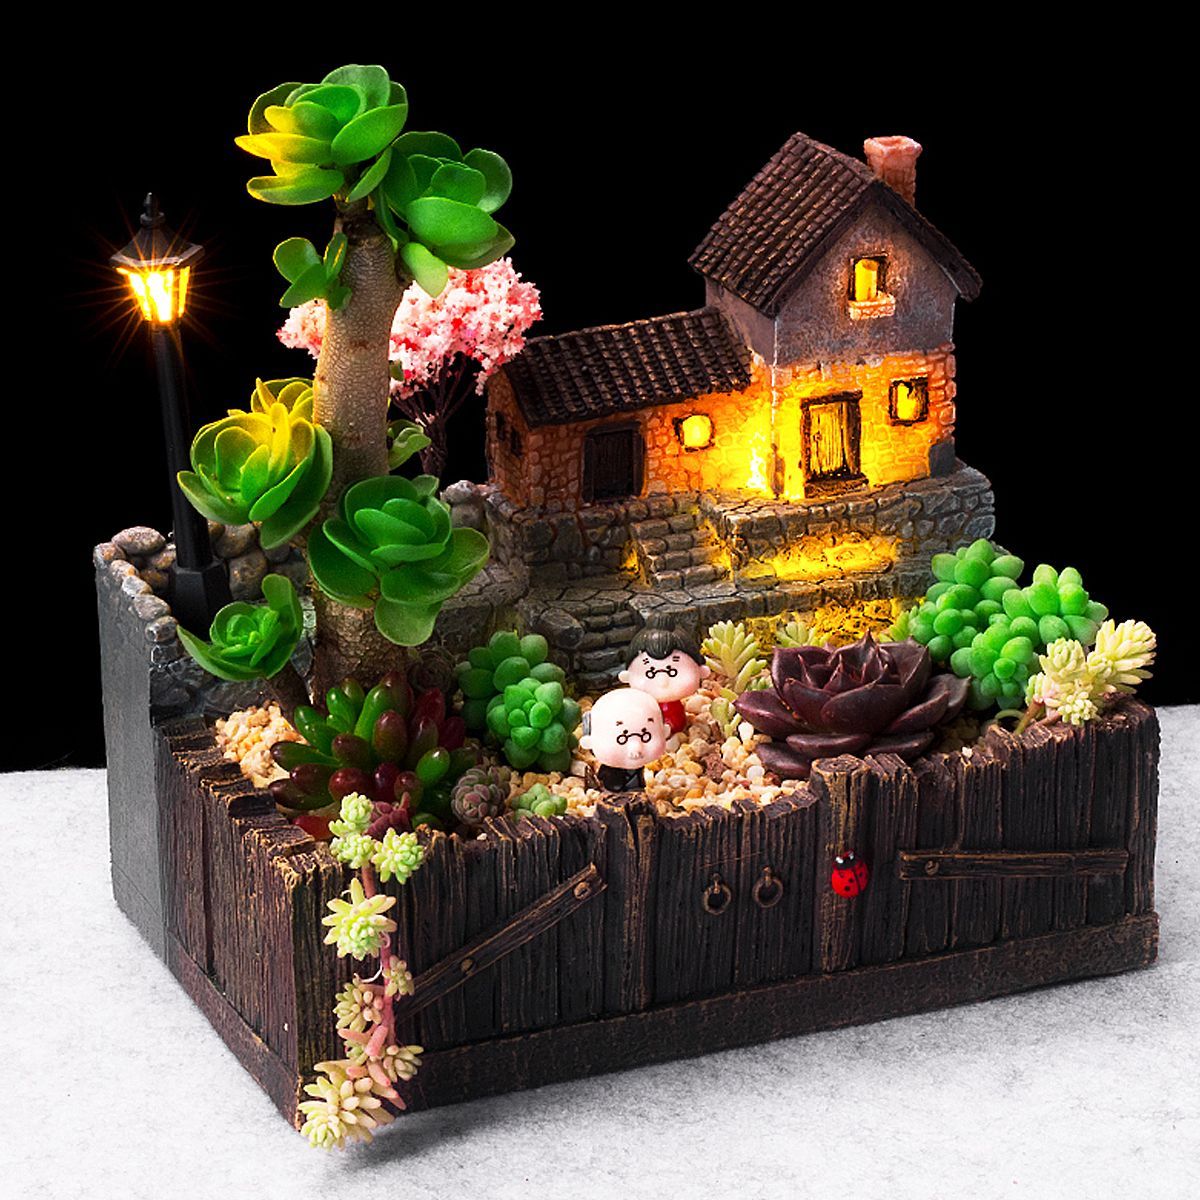 Lighting-Tuscanys-Cabin-Flower-Pot-Craft-Ornaments-Magic-Lantern-House-Planter-Bonsai-1473935